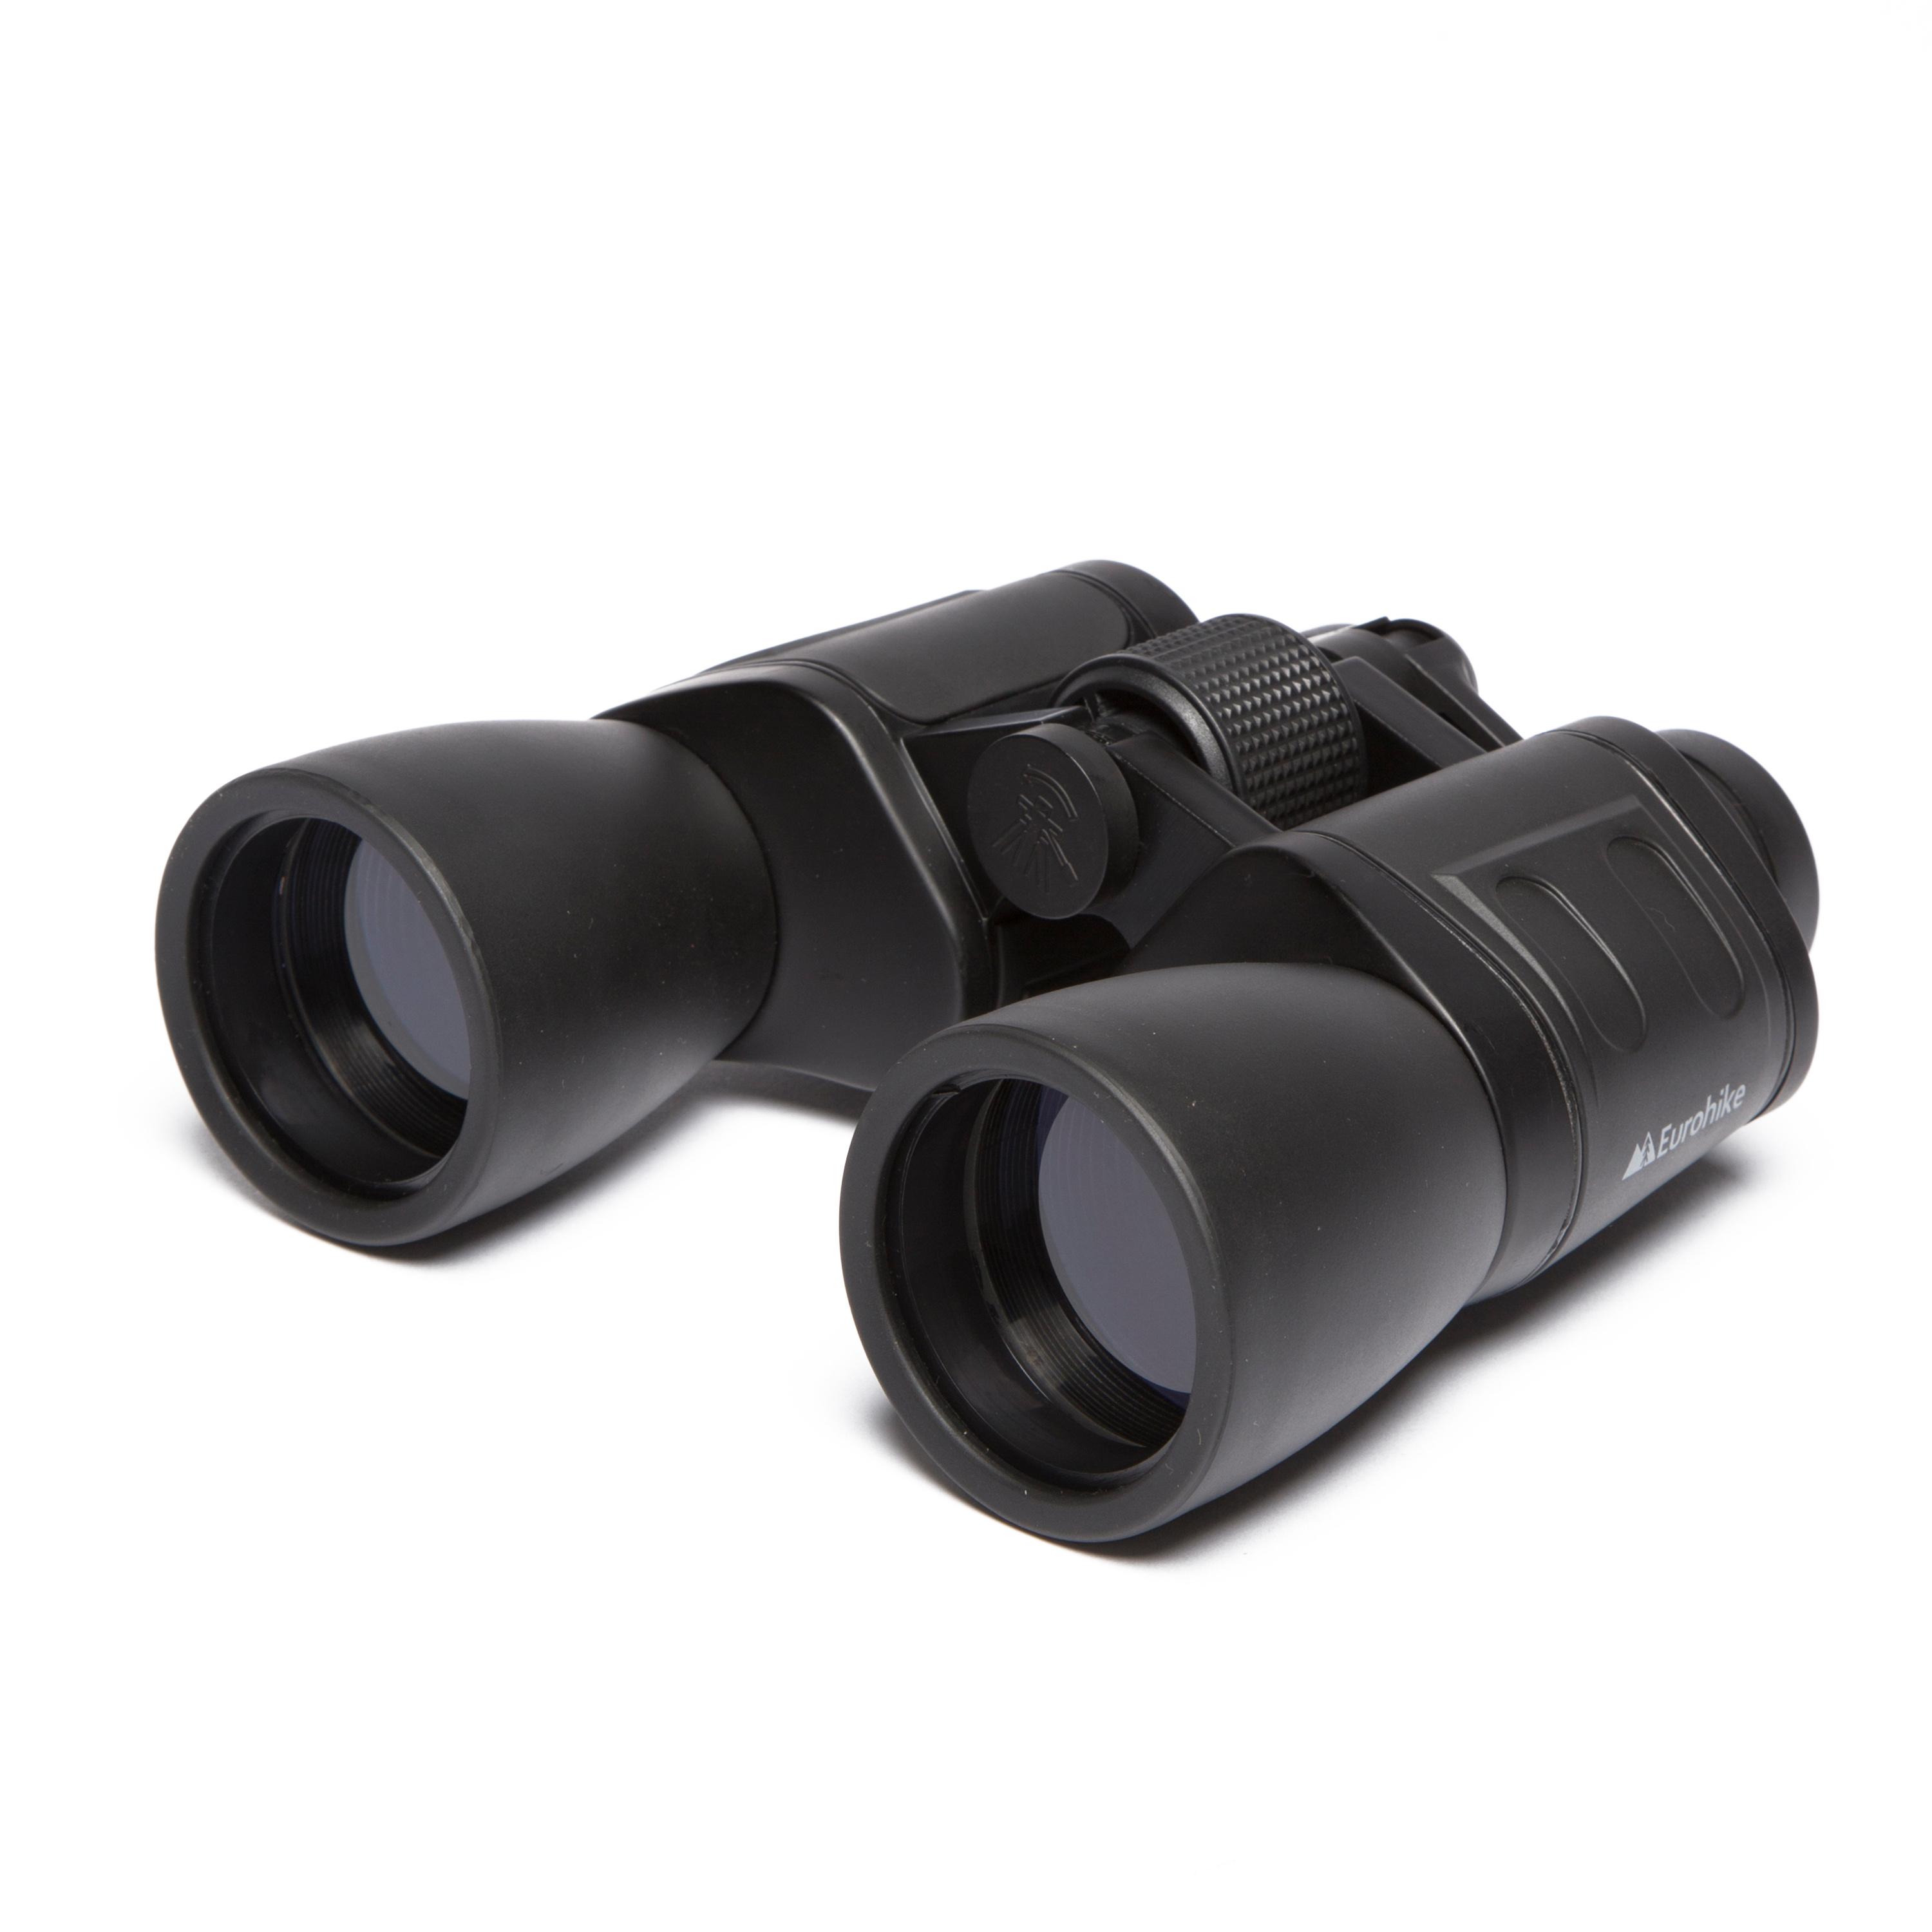 Image of Eurohike 10X50 Binoculars - Black, Black